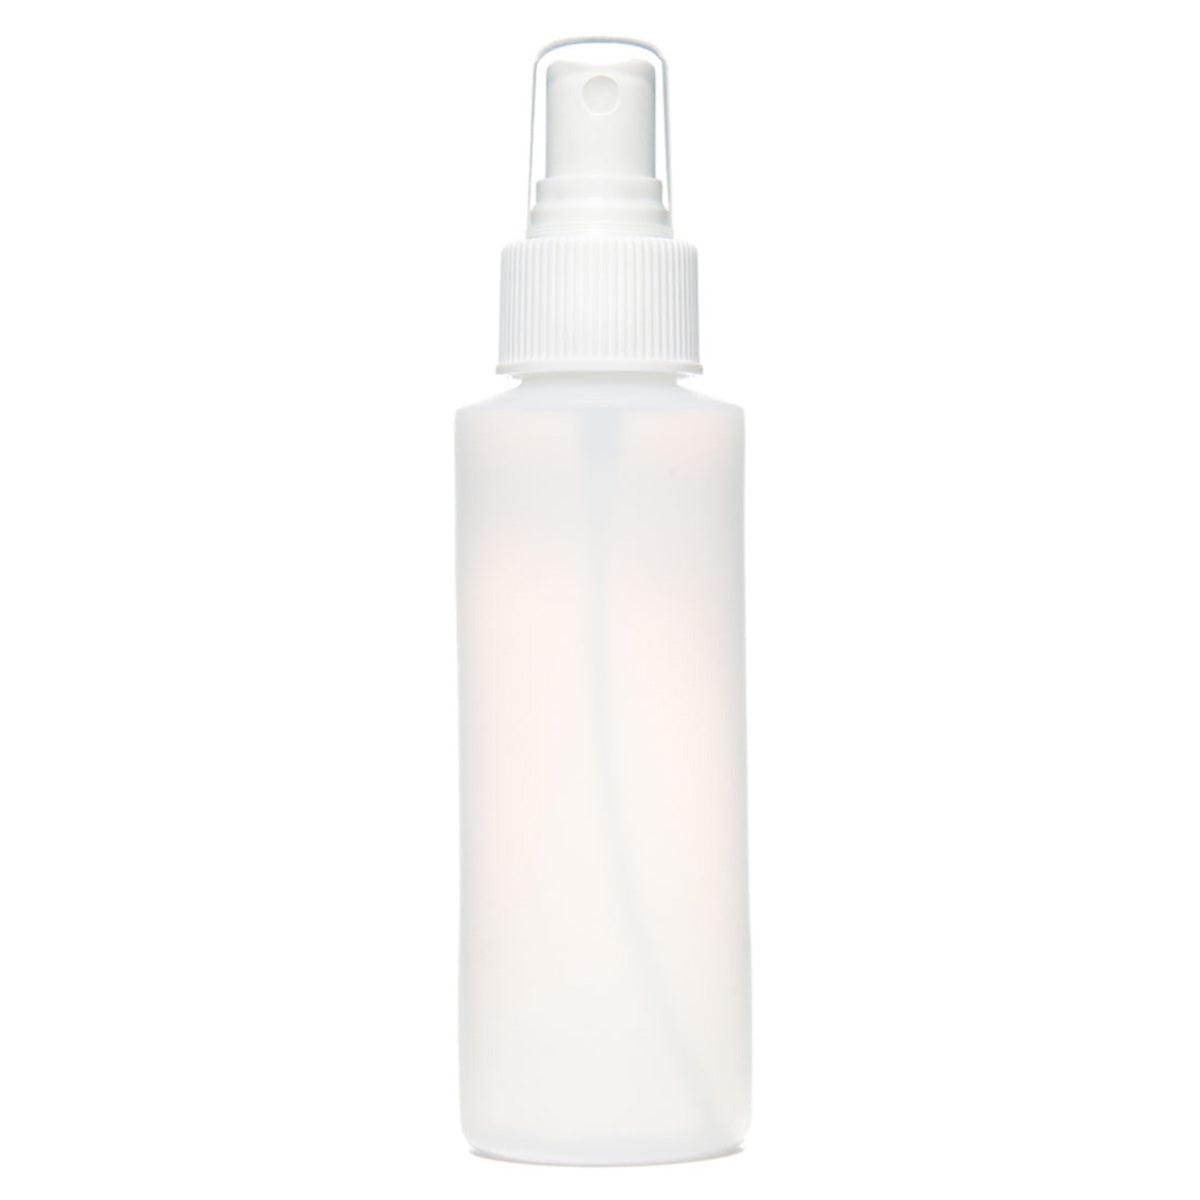 Plastic Bottle - Spray Top 4 oz